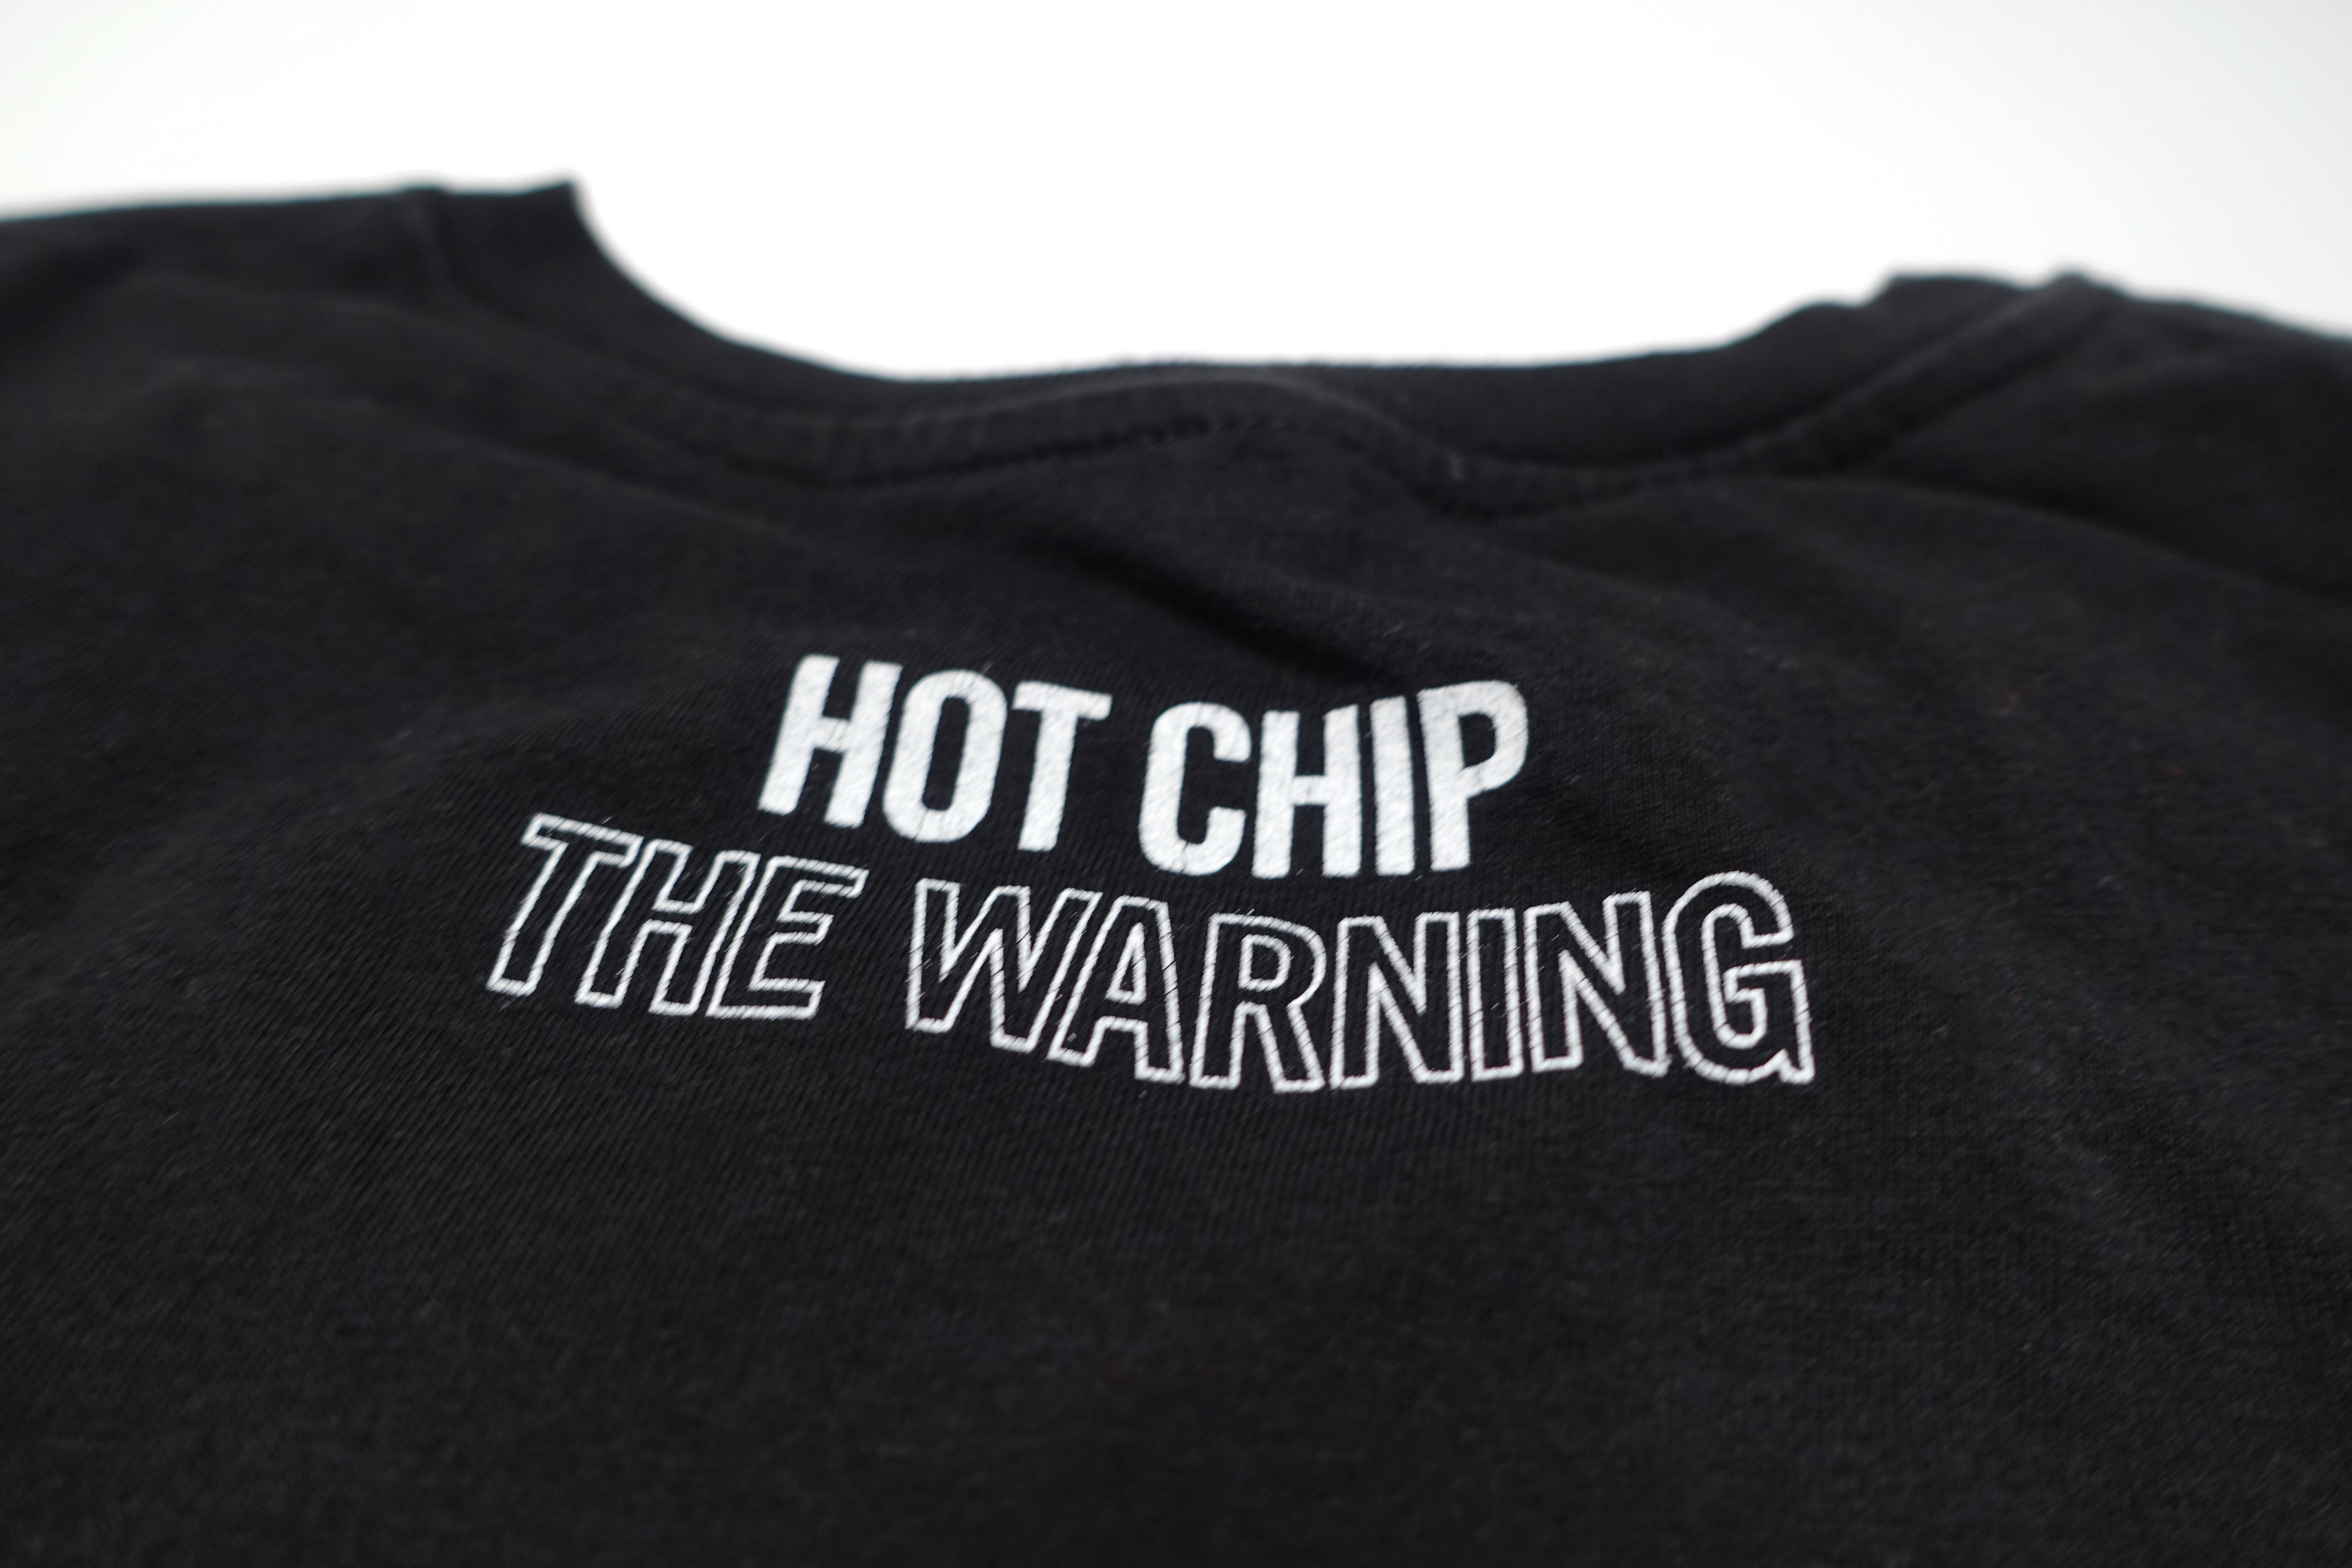 Hot Chip - The Warning 2006 Tour Shirt Size XL